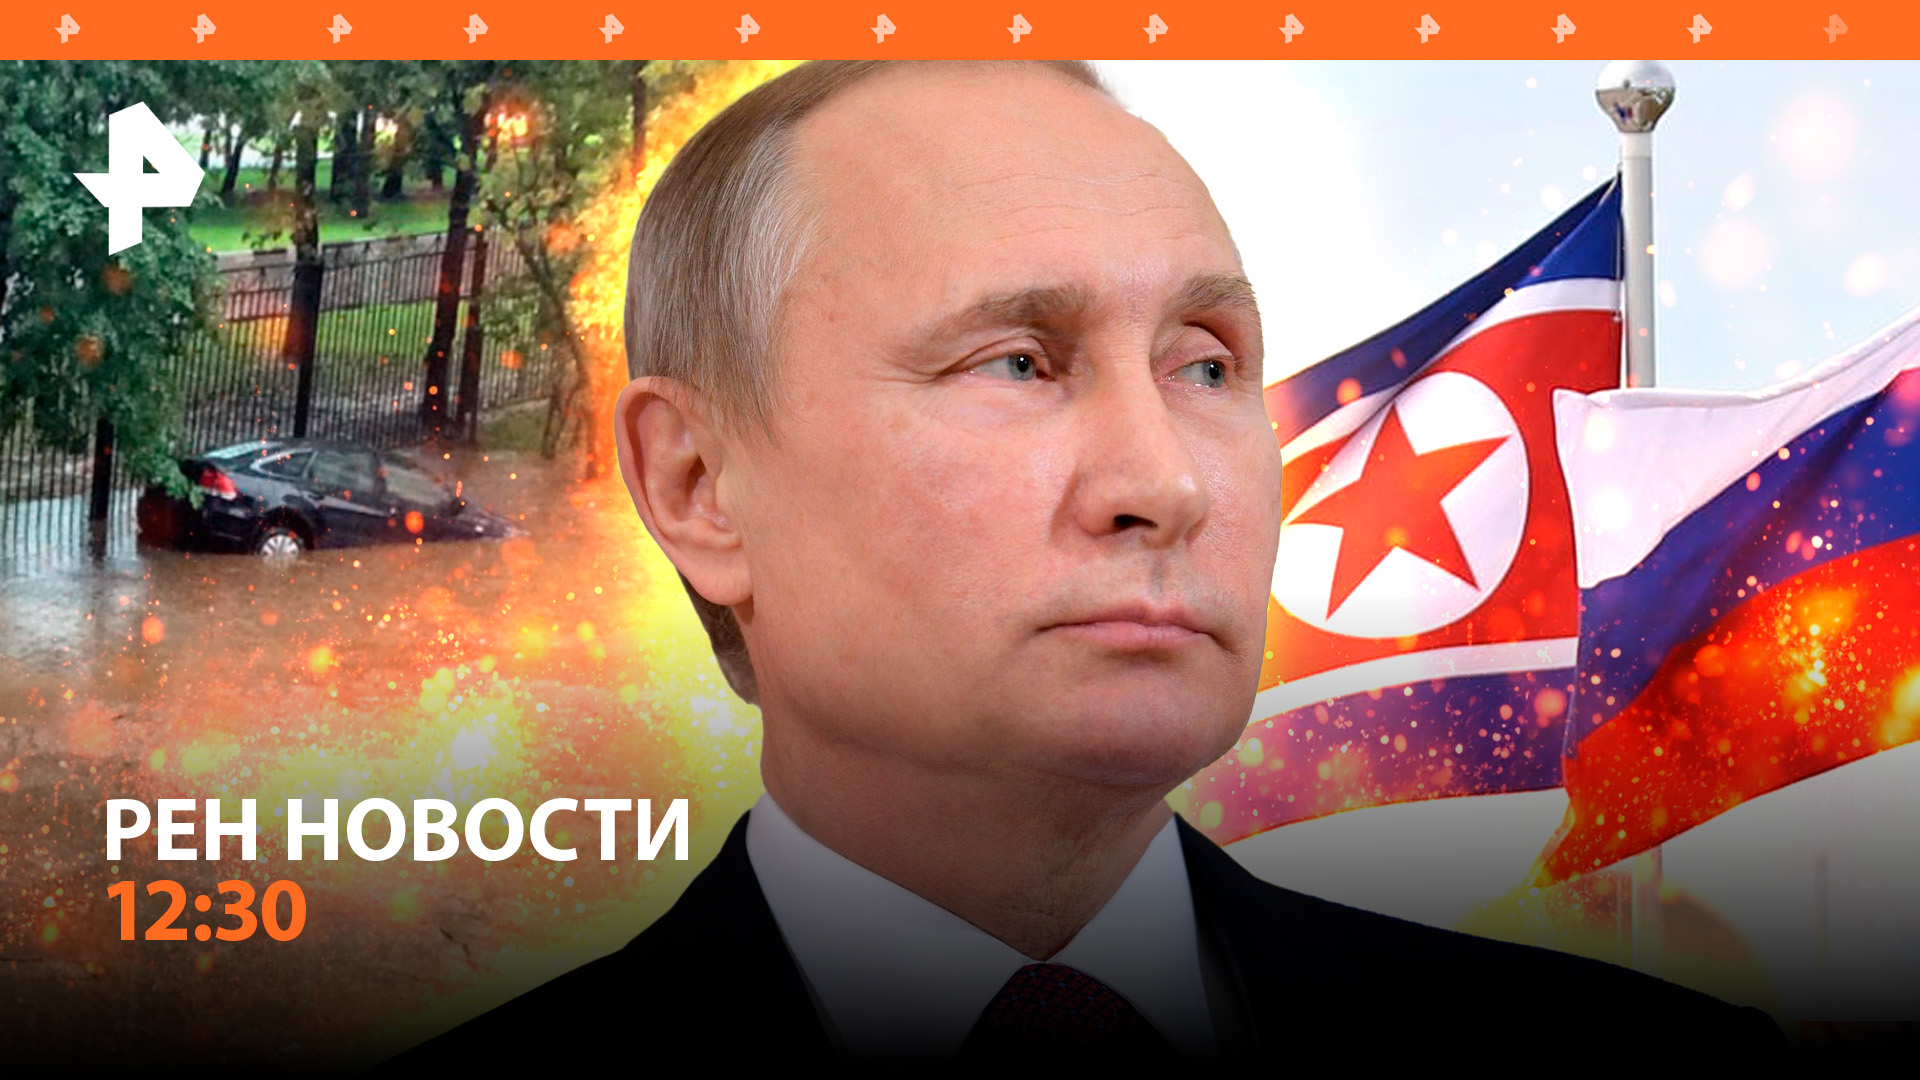 Визит Путина в КНДР и реакция Запада / Новые случаи отравления доставкой / РЕН Новости 18.06, 12:30